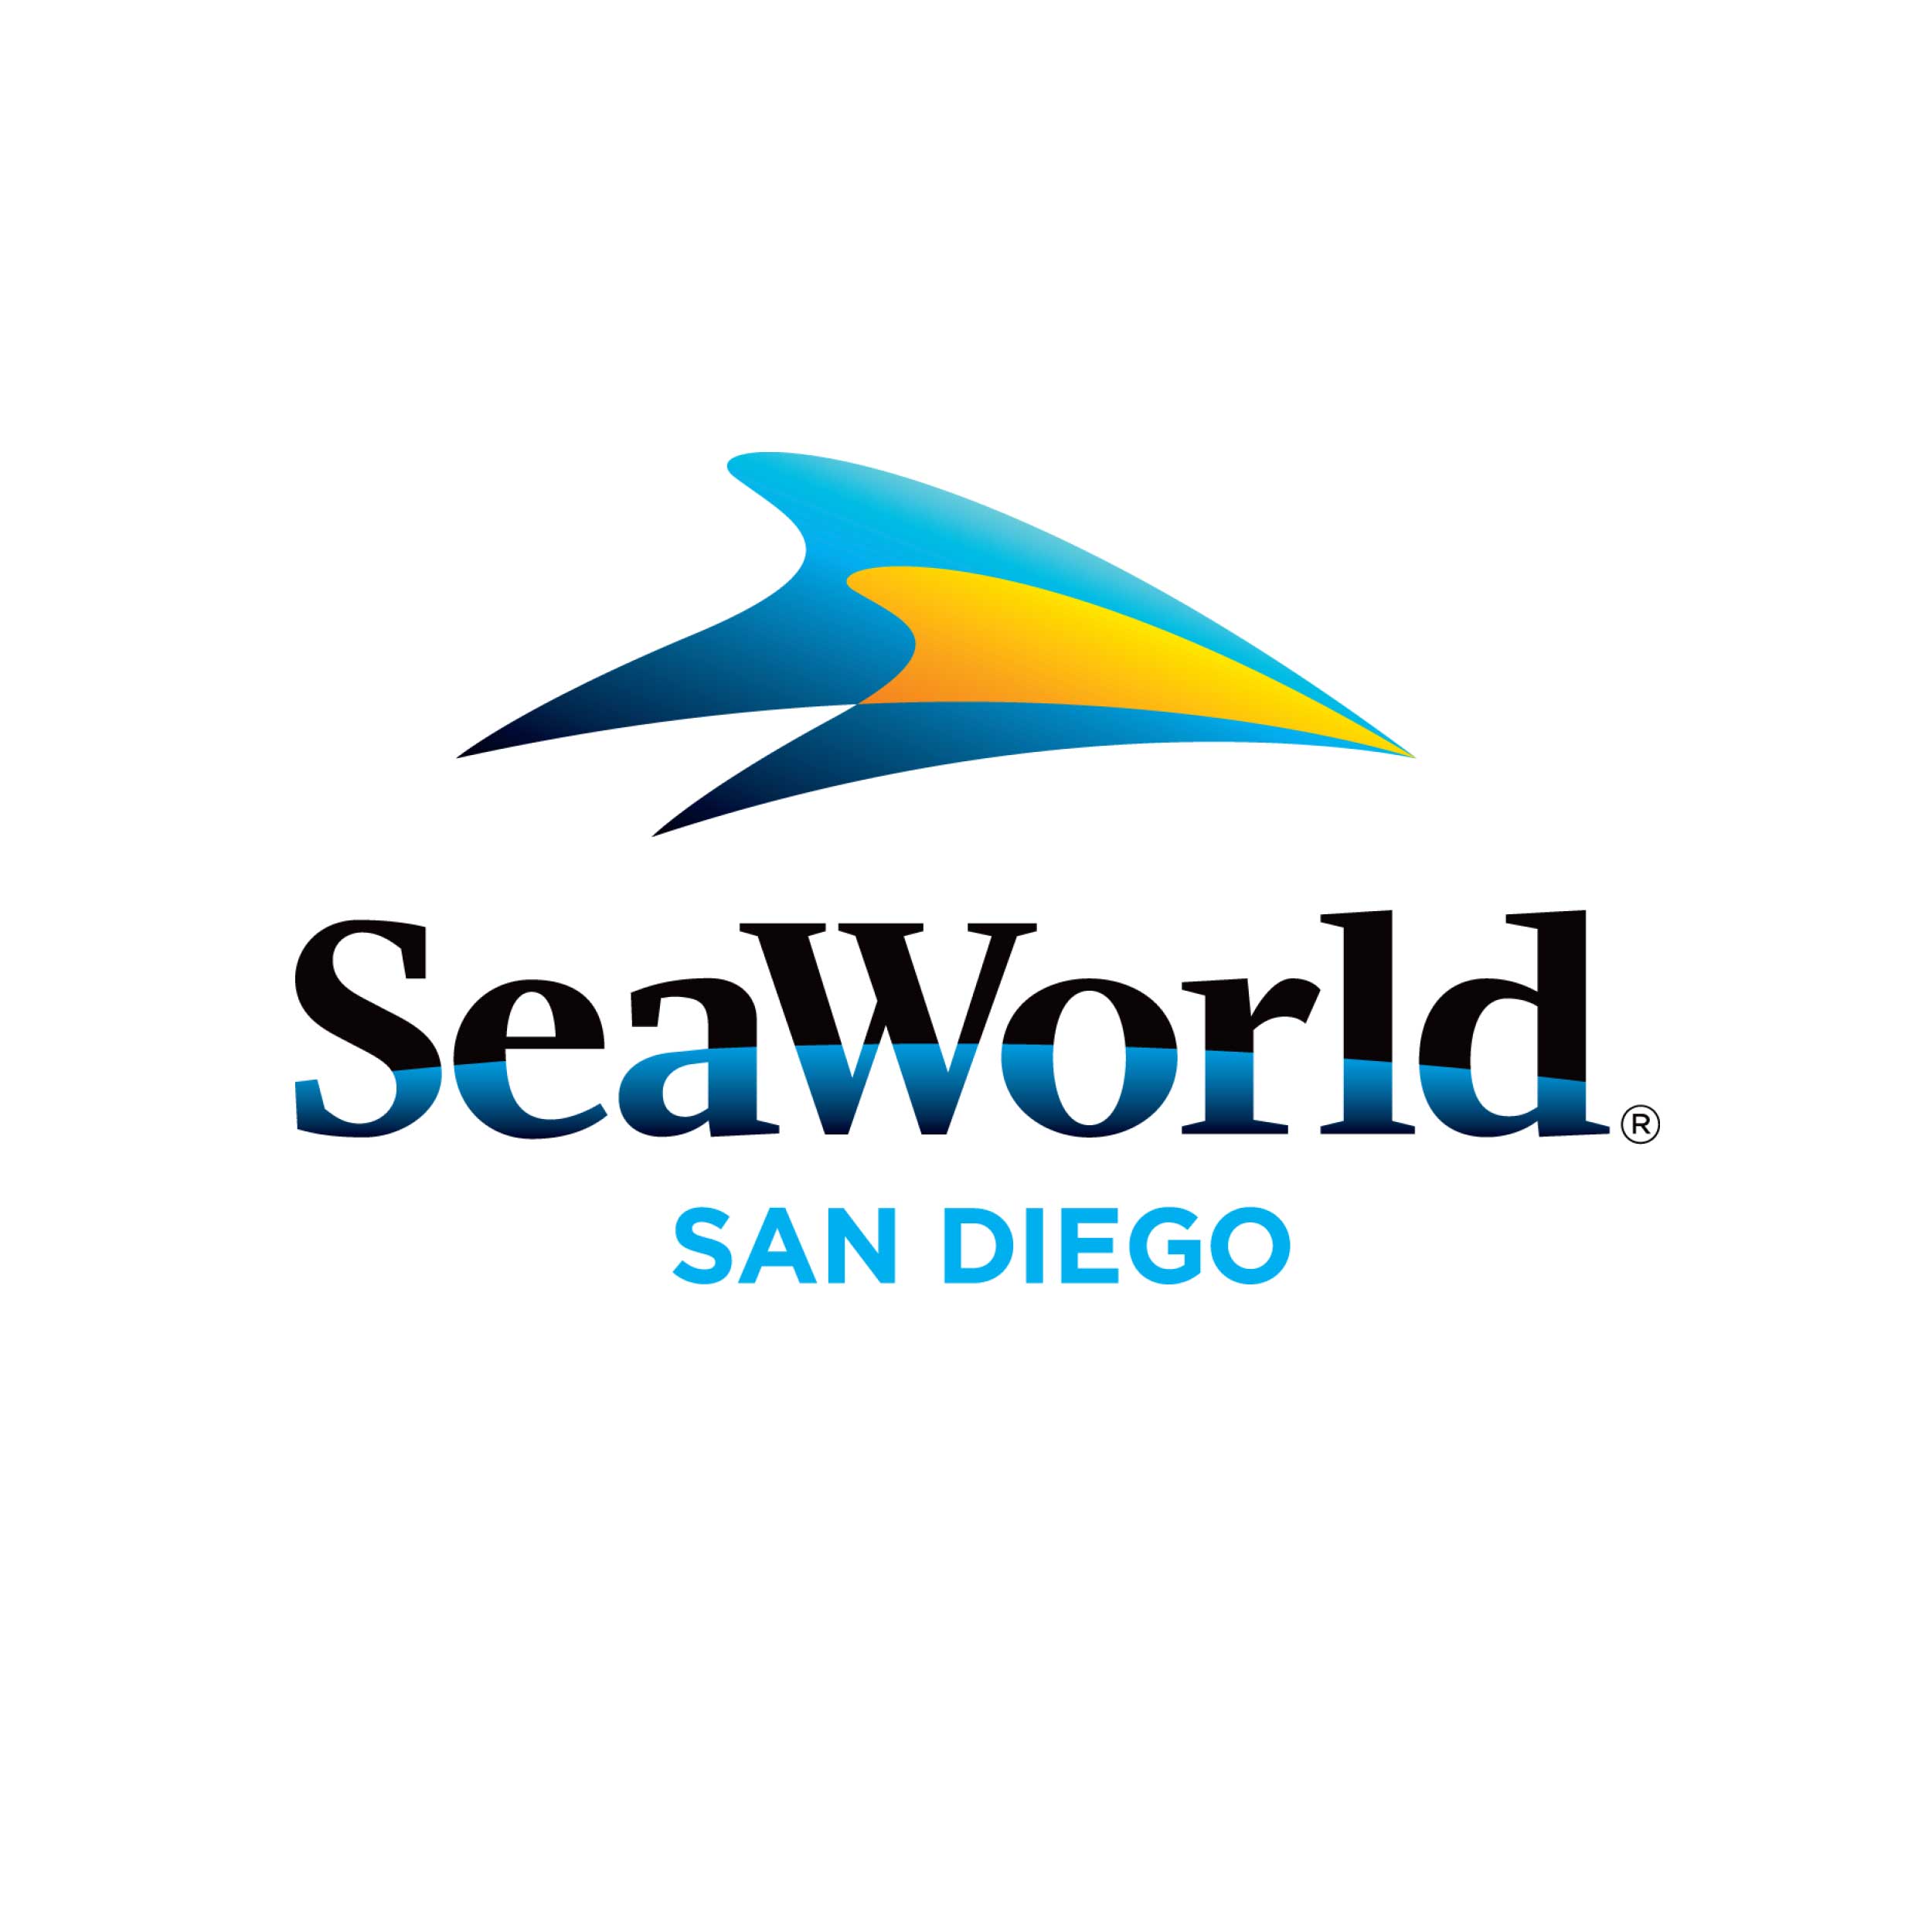 5515-1-Summit2017_Logos_Seaworld.jpg